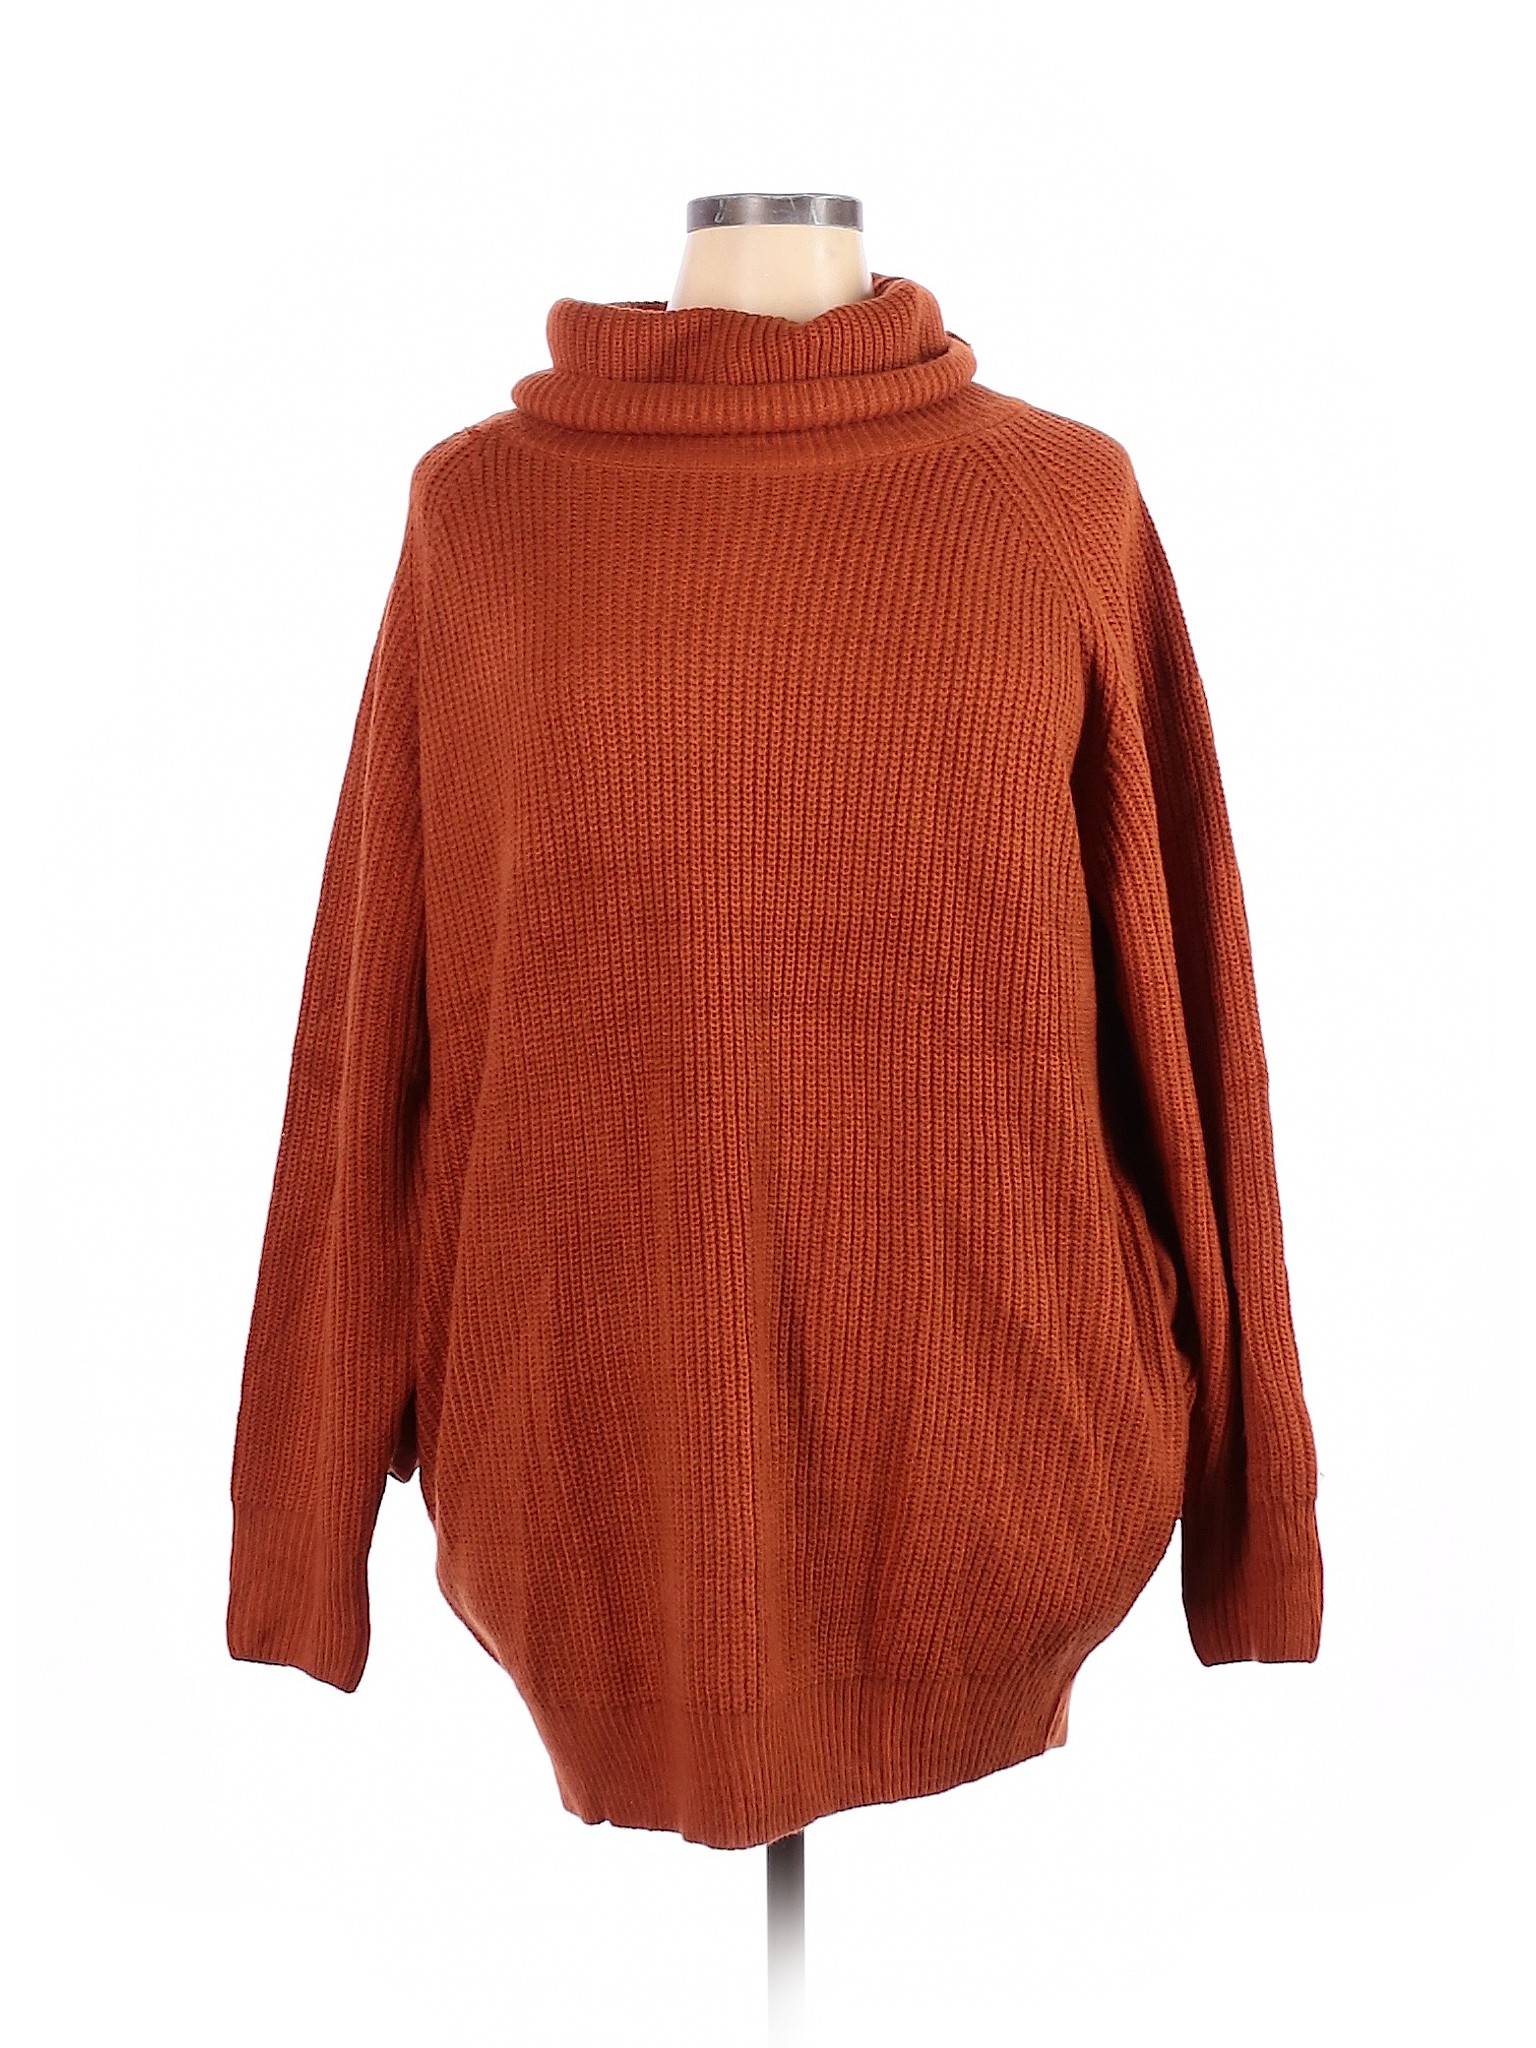 Unbranded Women Orange Turtleneck Sweater XL | eBay